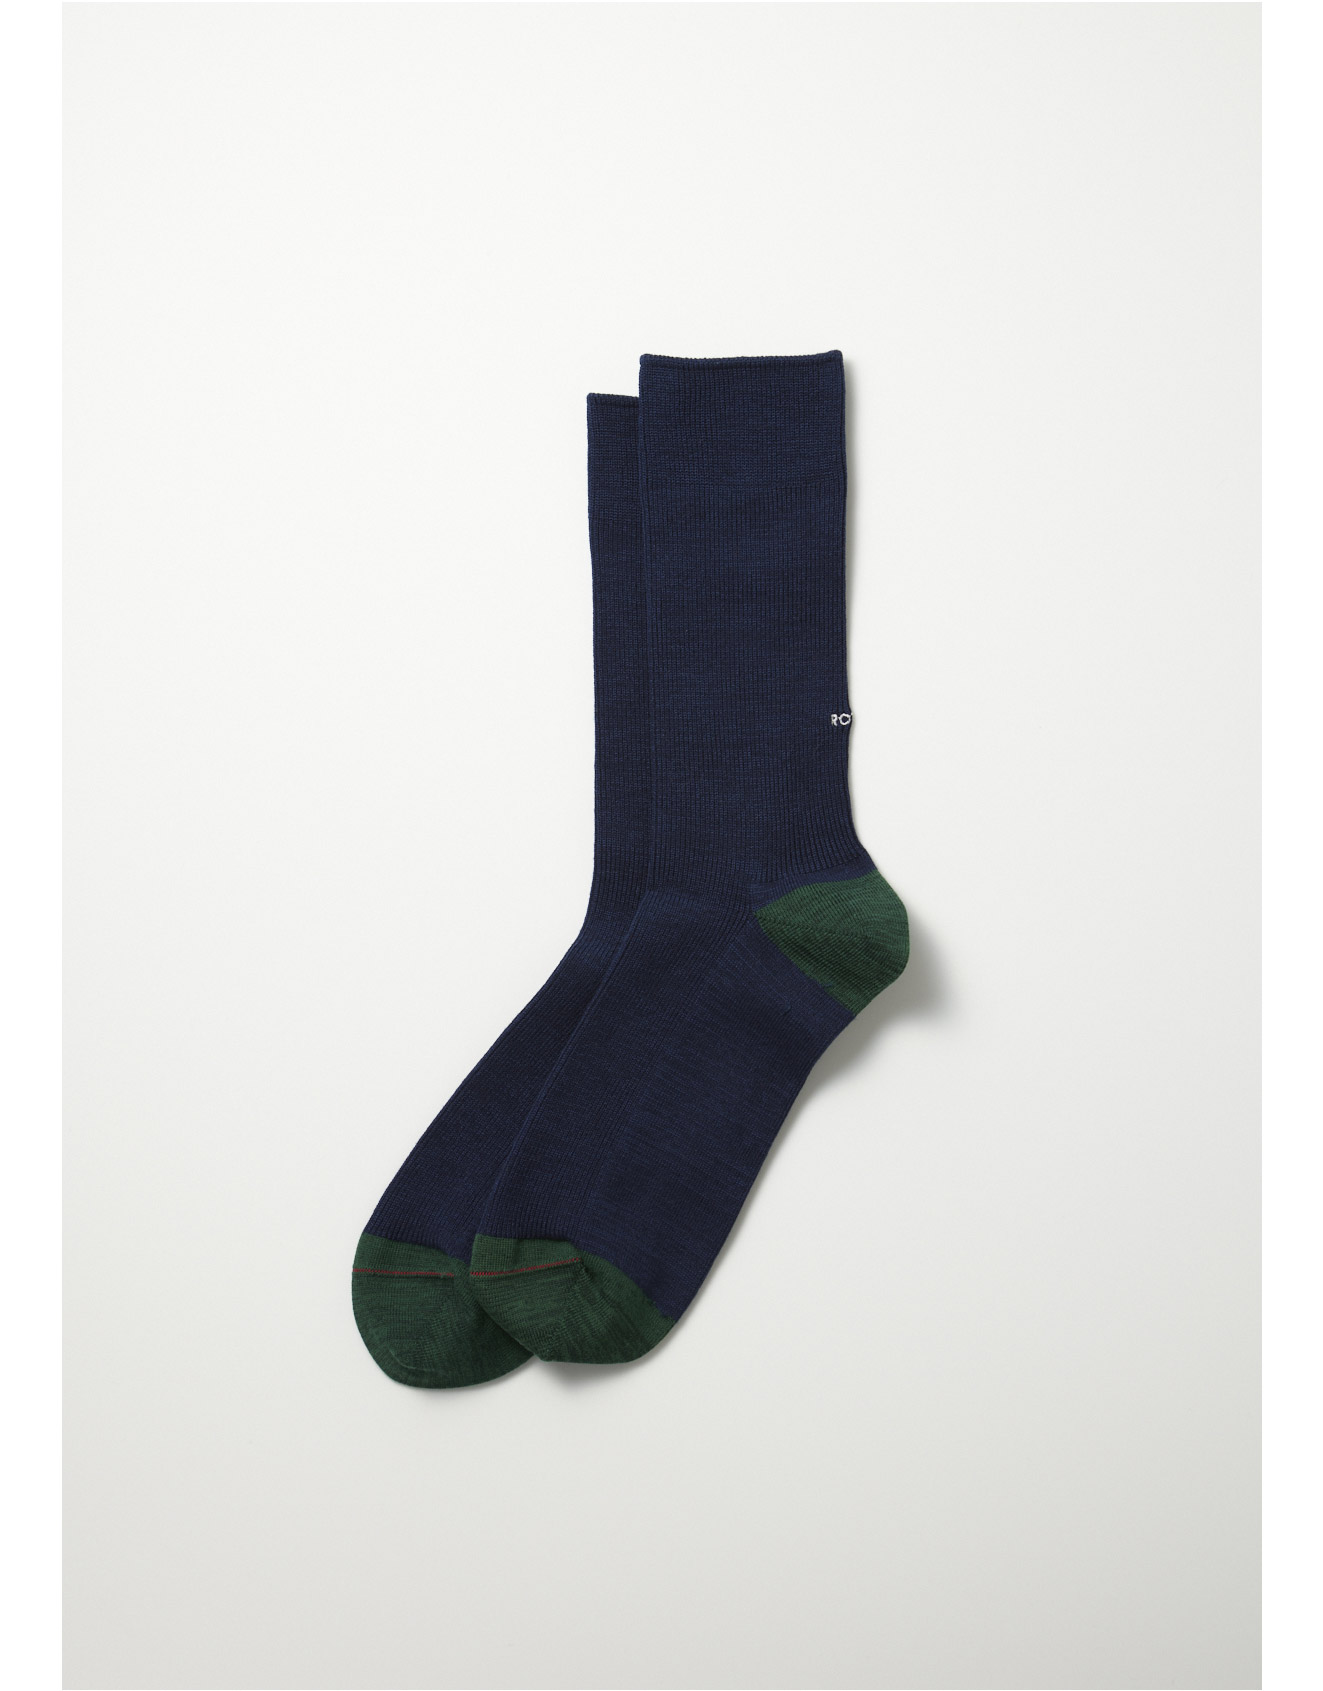 RoToTo – Organic Cotton & Recycled Poluester Ribbed Crew Socks